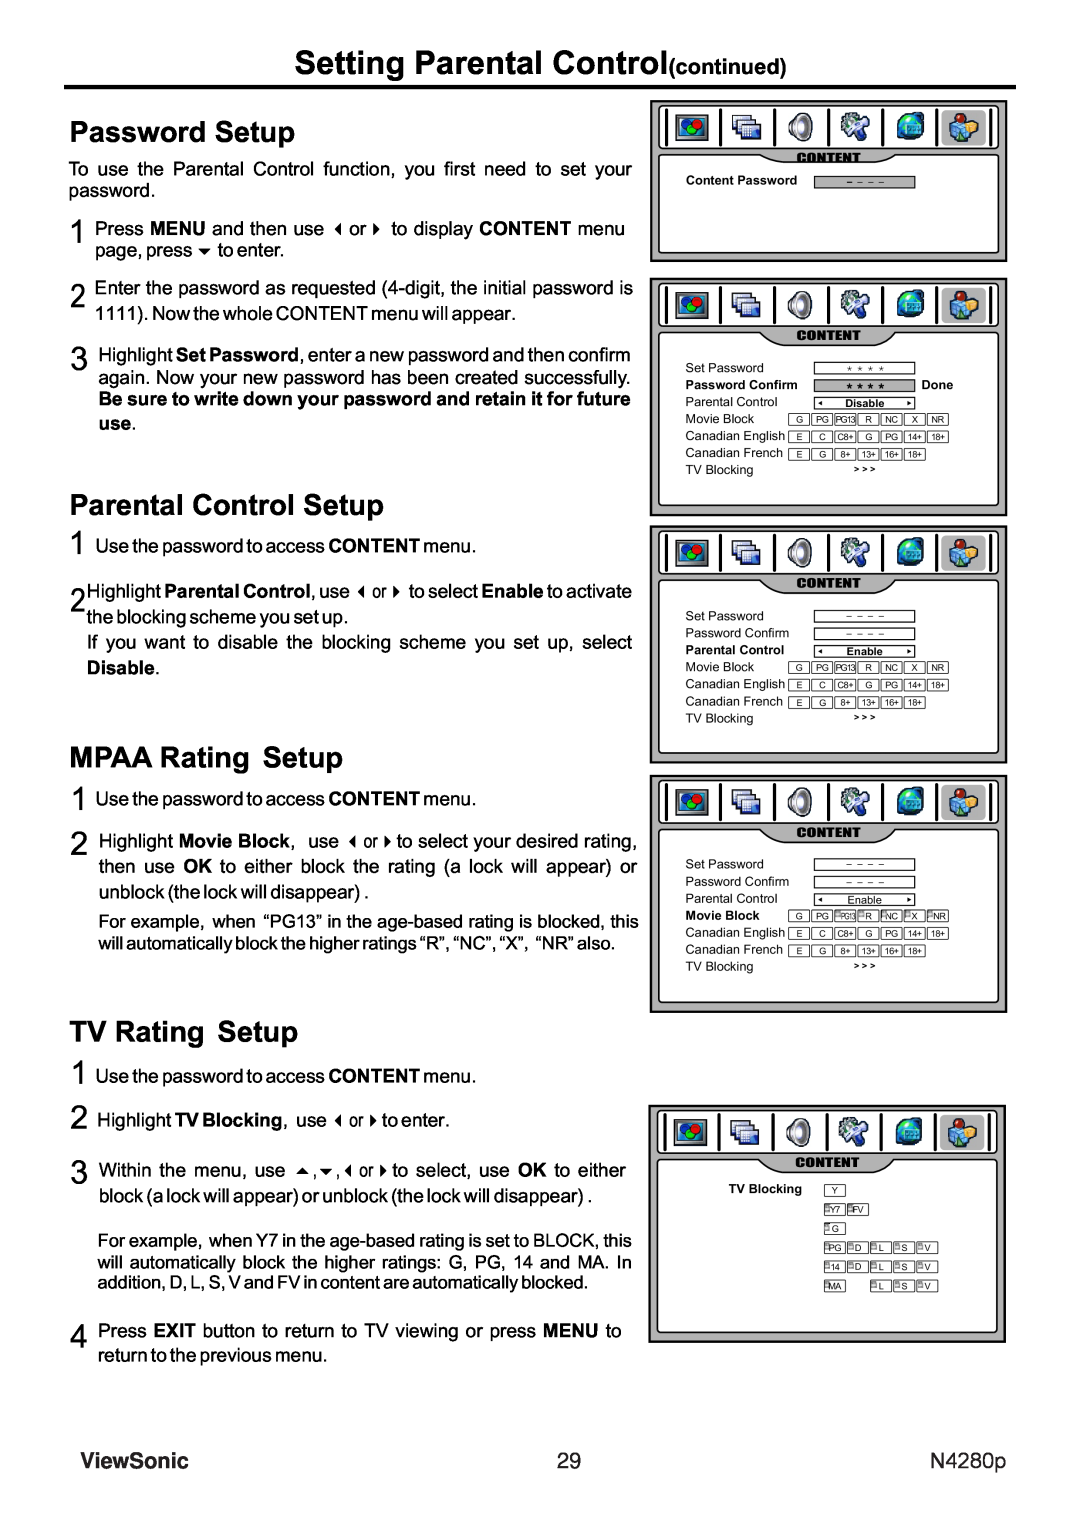 ViewSonic N4280p manual Password Setup, Parental Control Setup, MPAA Rating Setup, TV Rating Setup, ViewSonic 